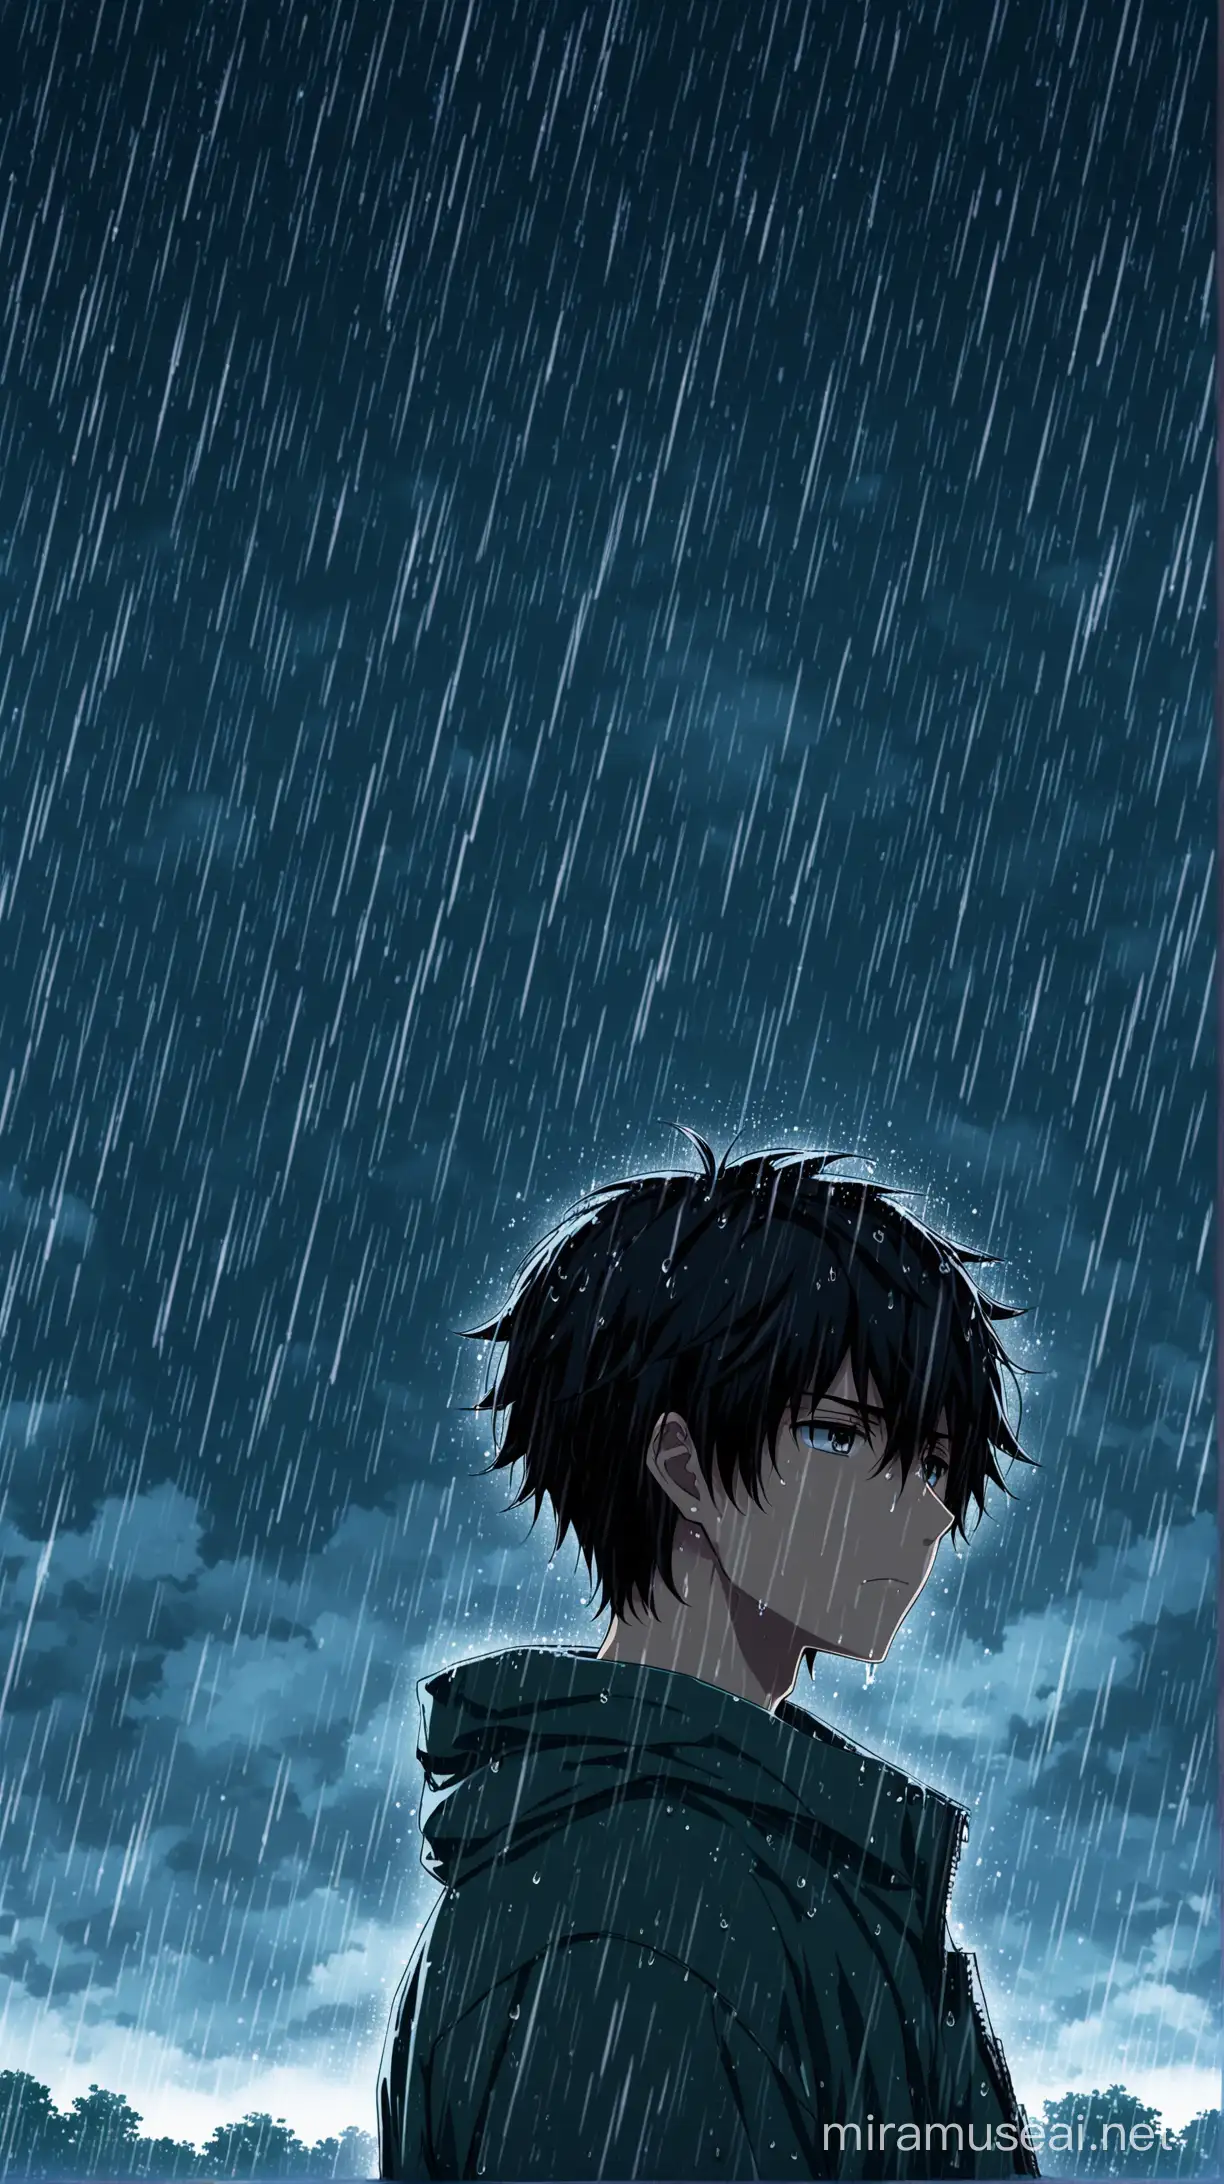 anime movie style create a Sad anime Boy raining, strome cloudy in background